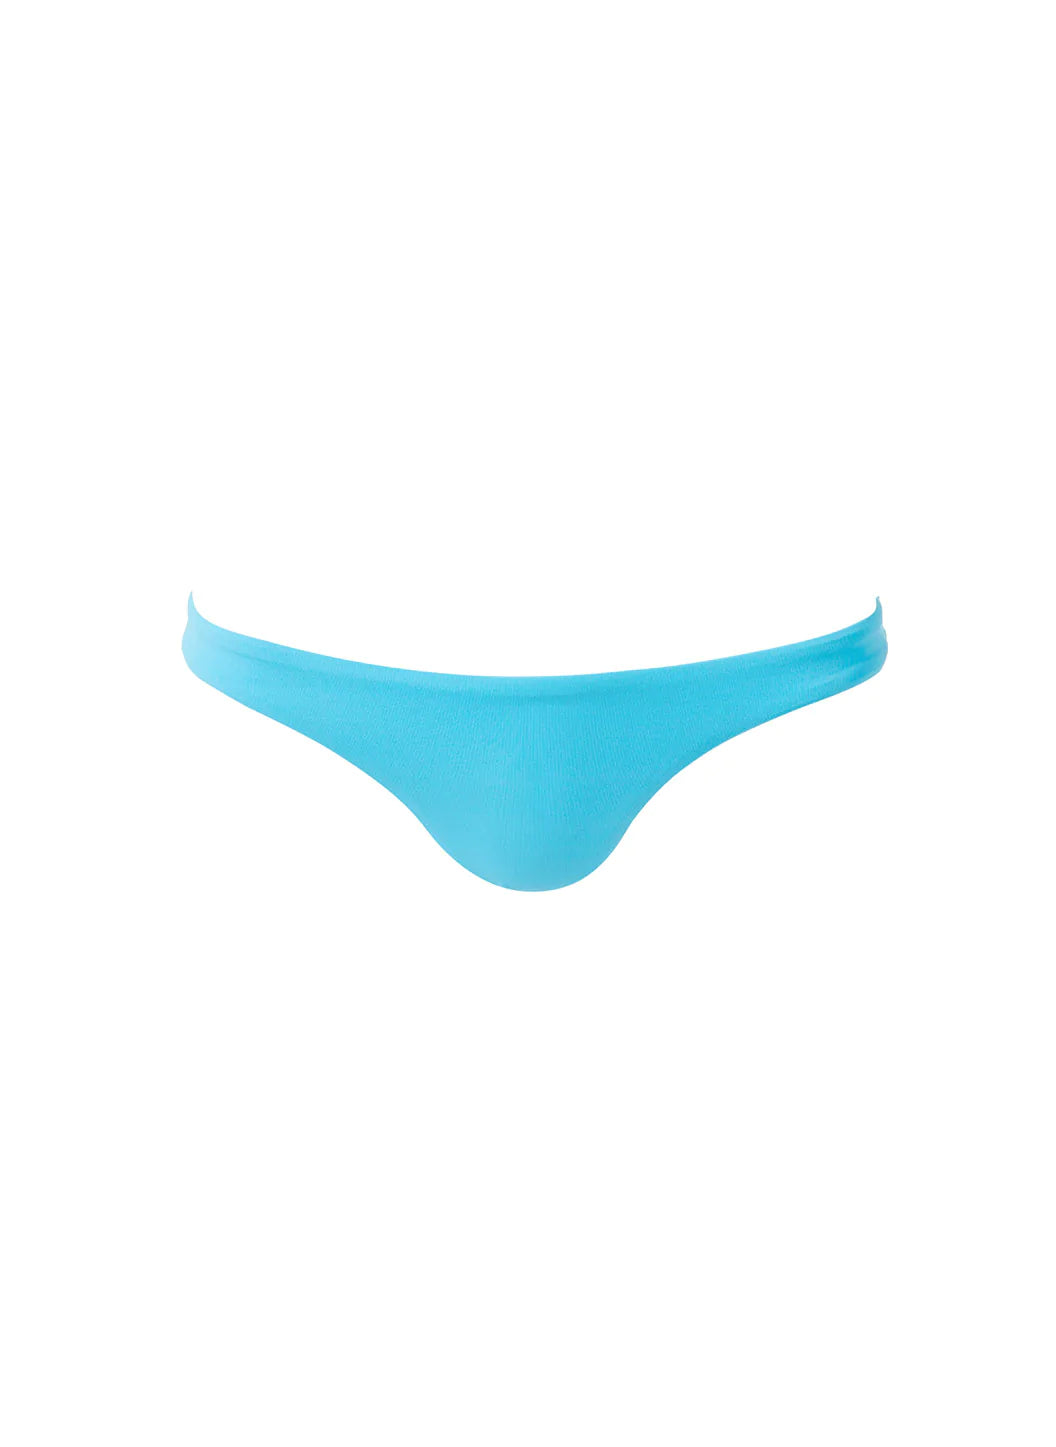 Orlando Aqua Bikini Bottom